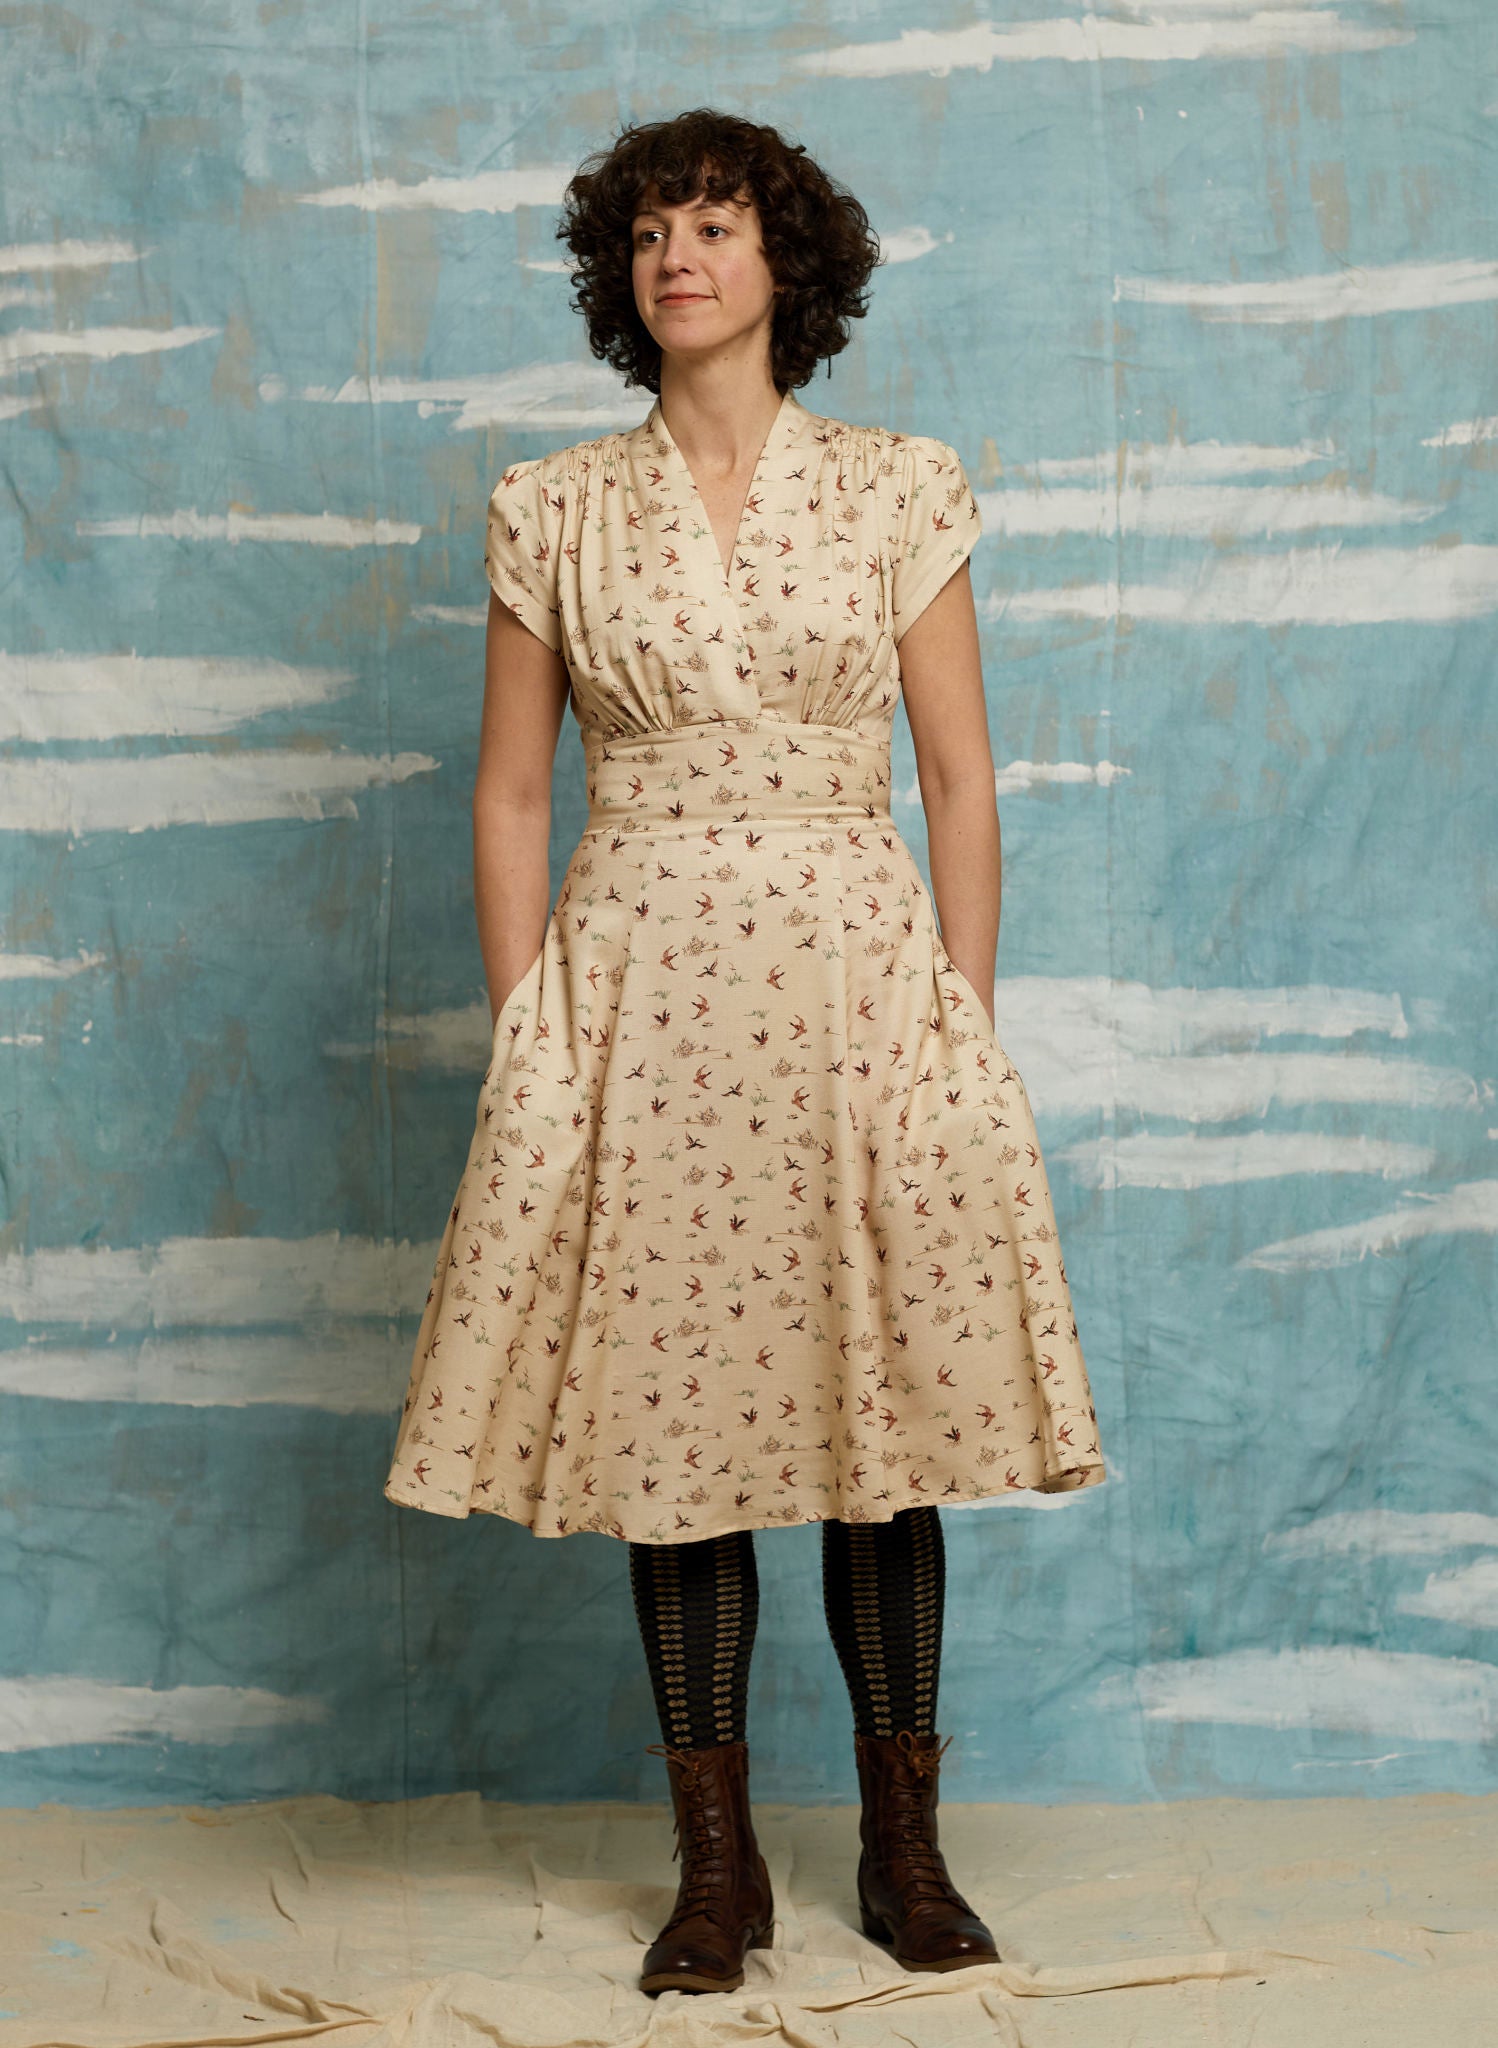 Cap sleeve 1940s style knee length dress with fun print of ducks on cream background